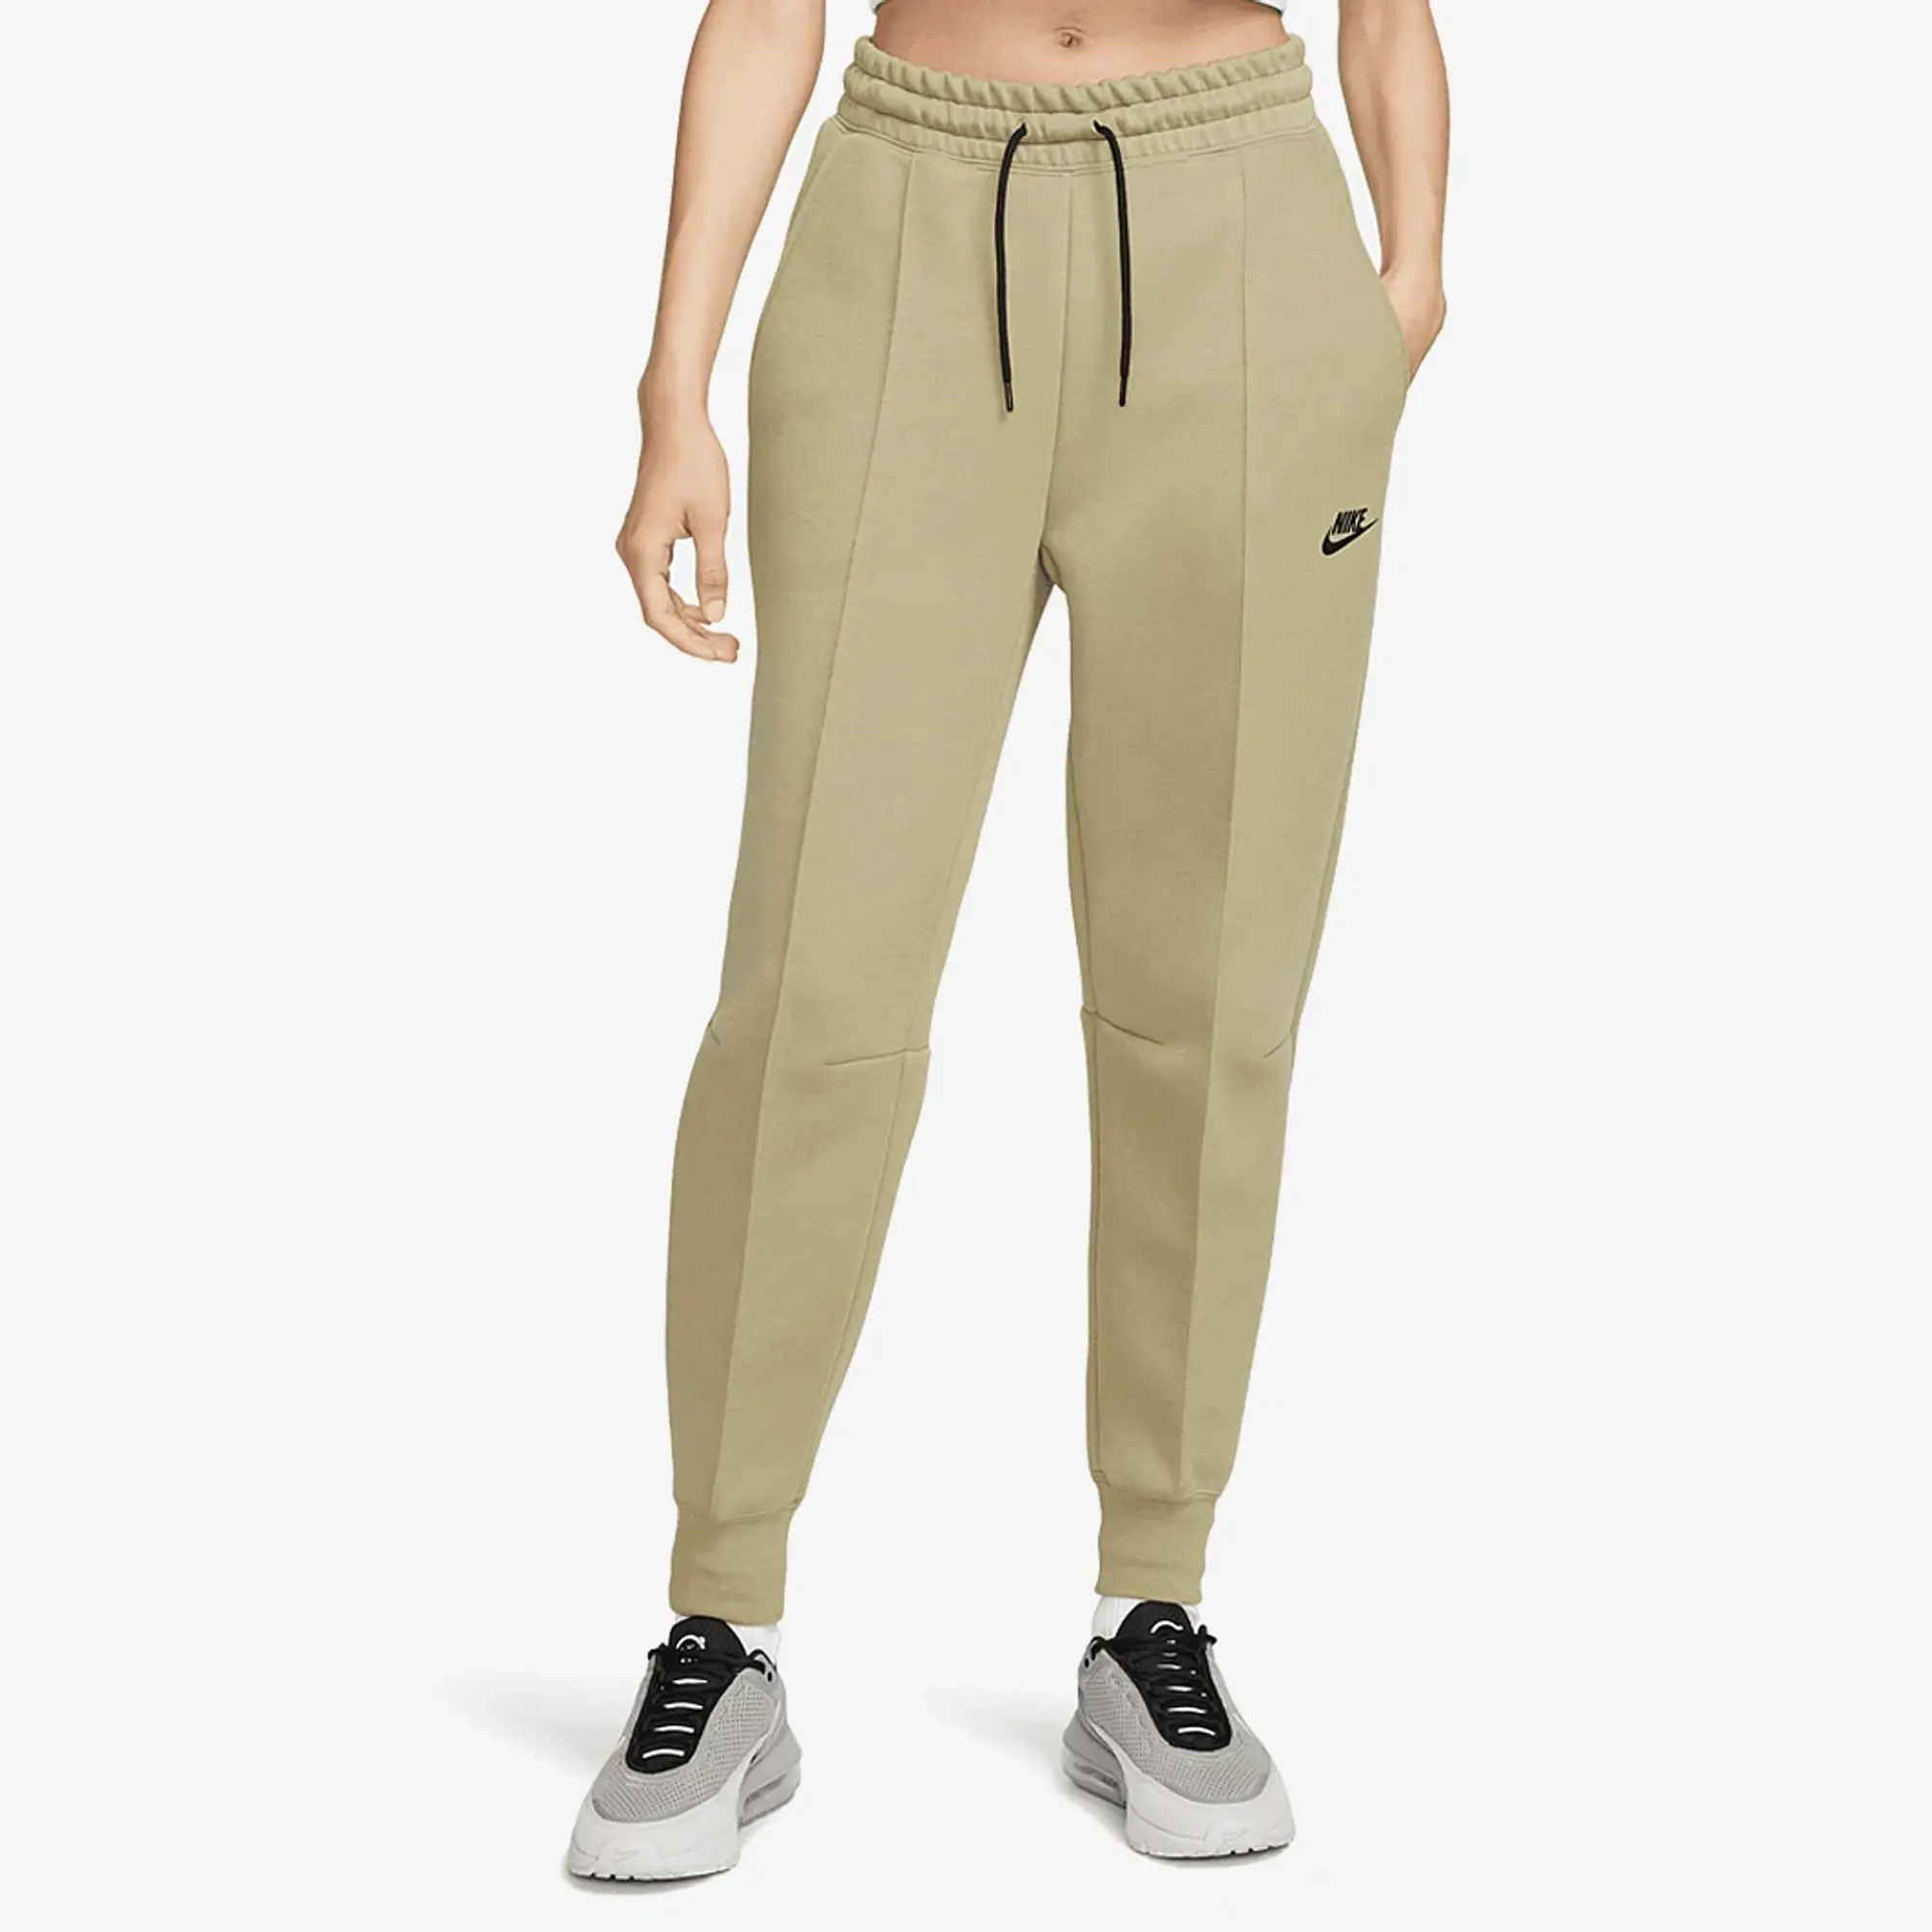 Nike Womens Tech Fleece Mid-Rise Pant - Neutral Olive / Black